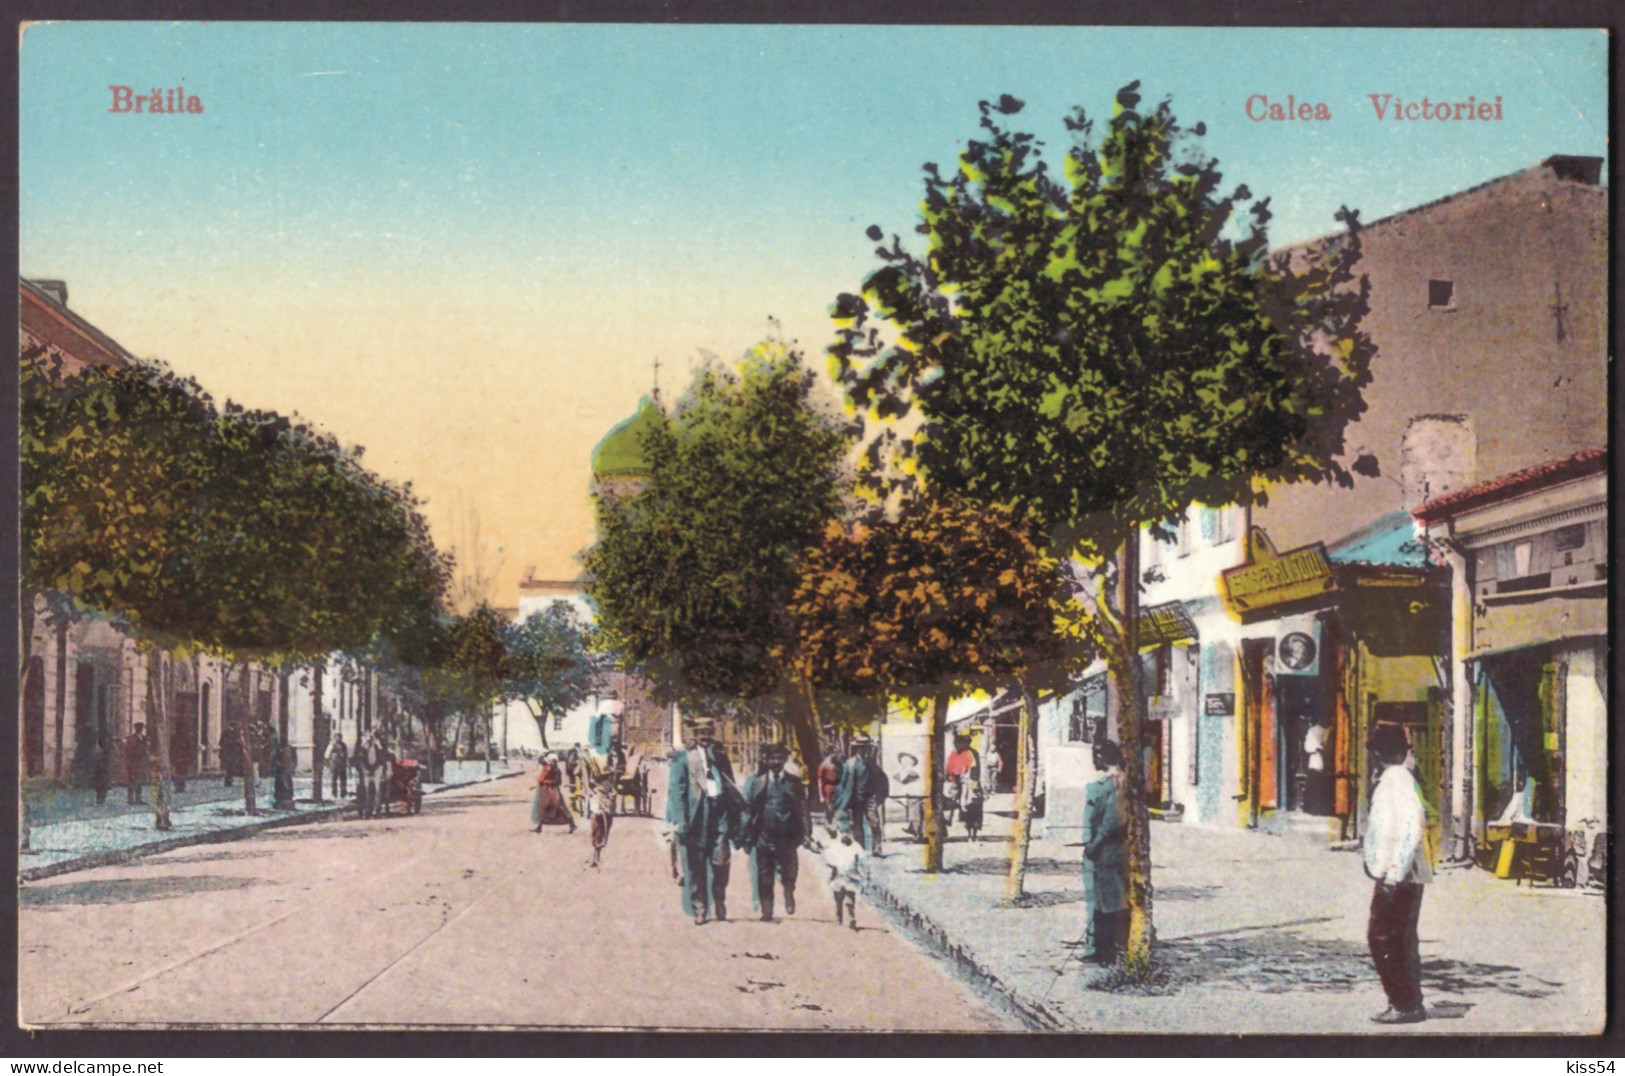 RO 89 - 23921 BRAILA, Street Stores, Romania - Old Postcard - Unused - Romania